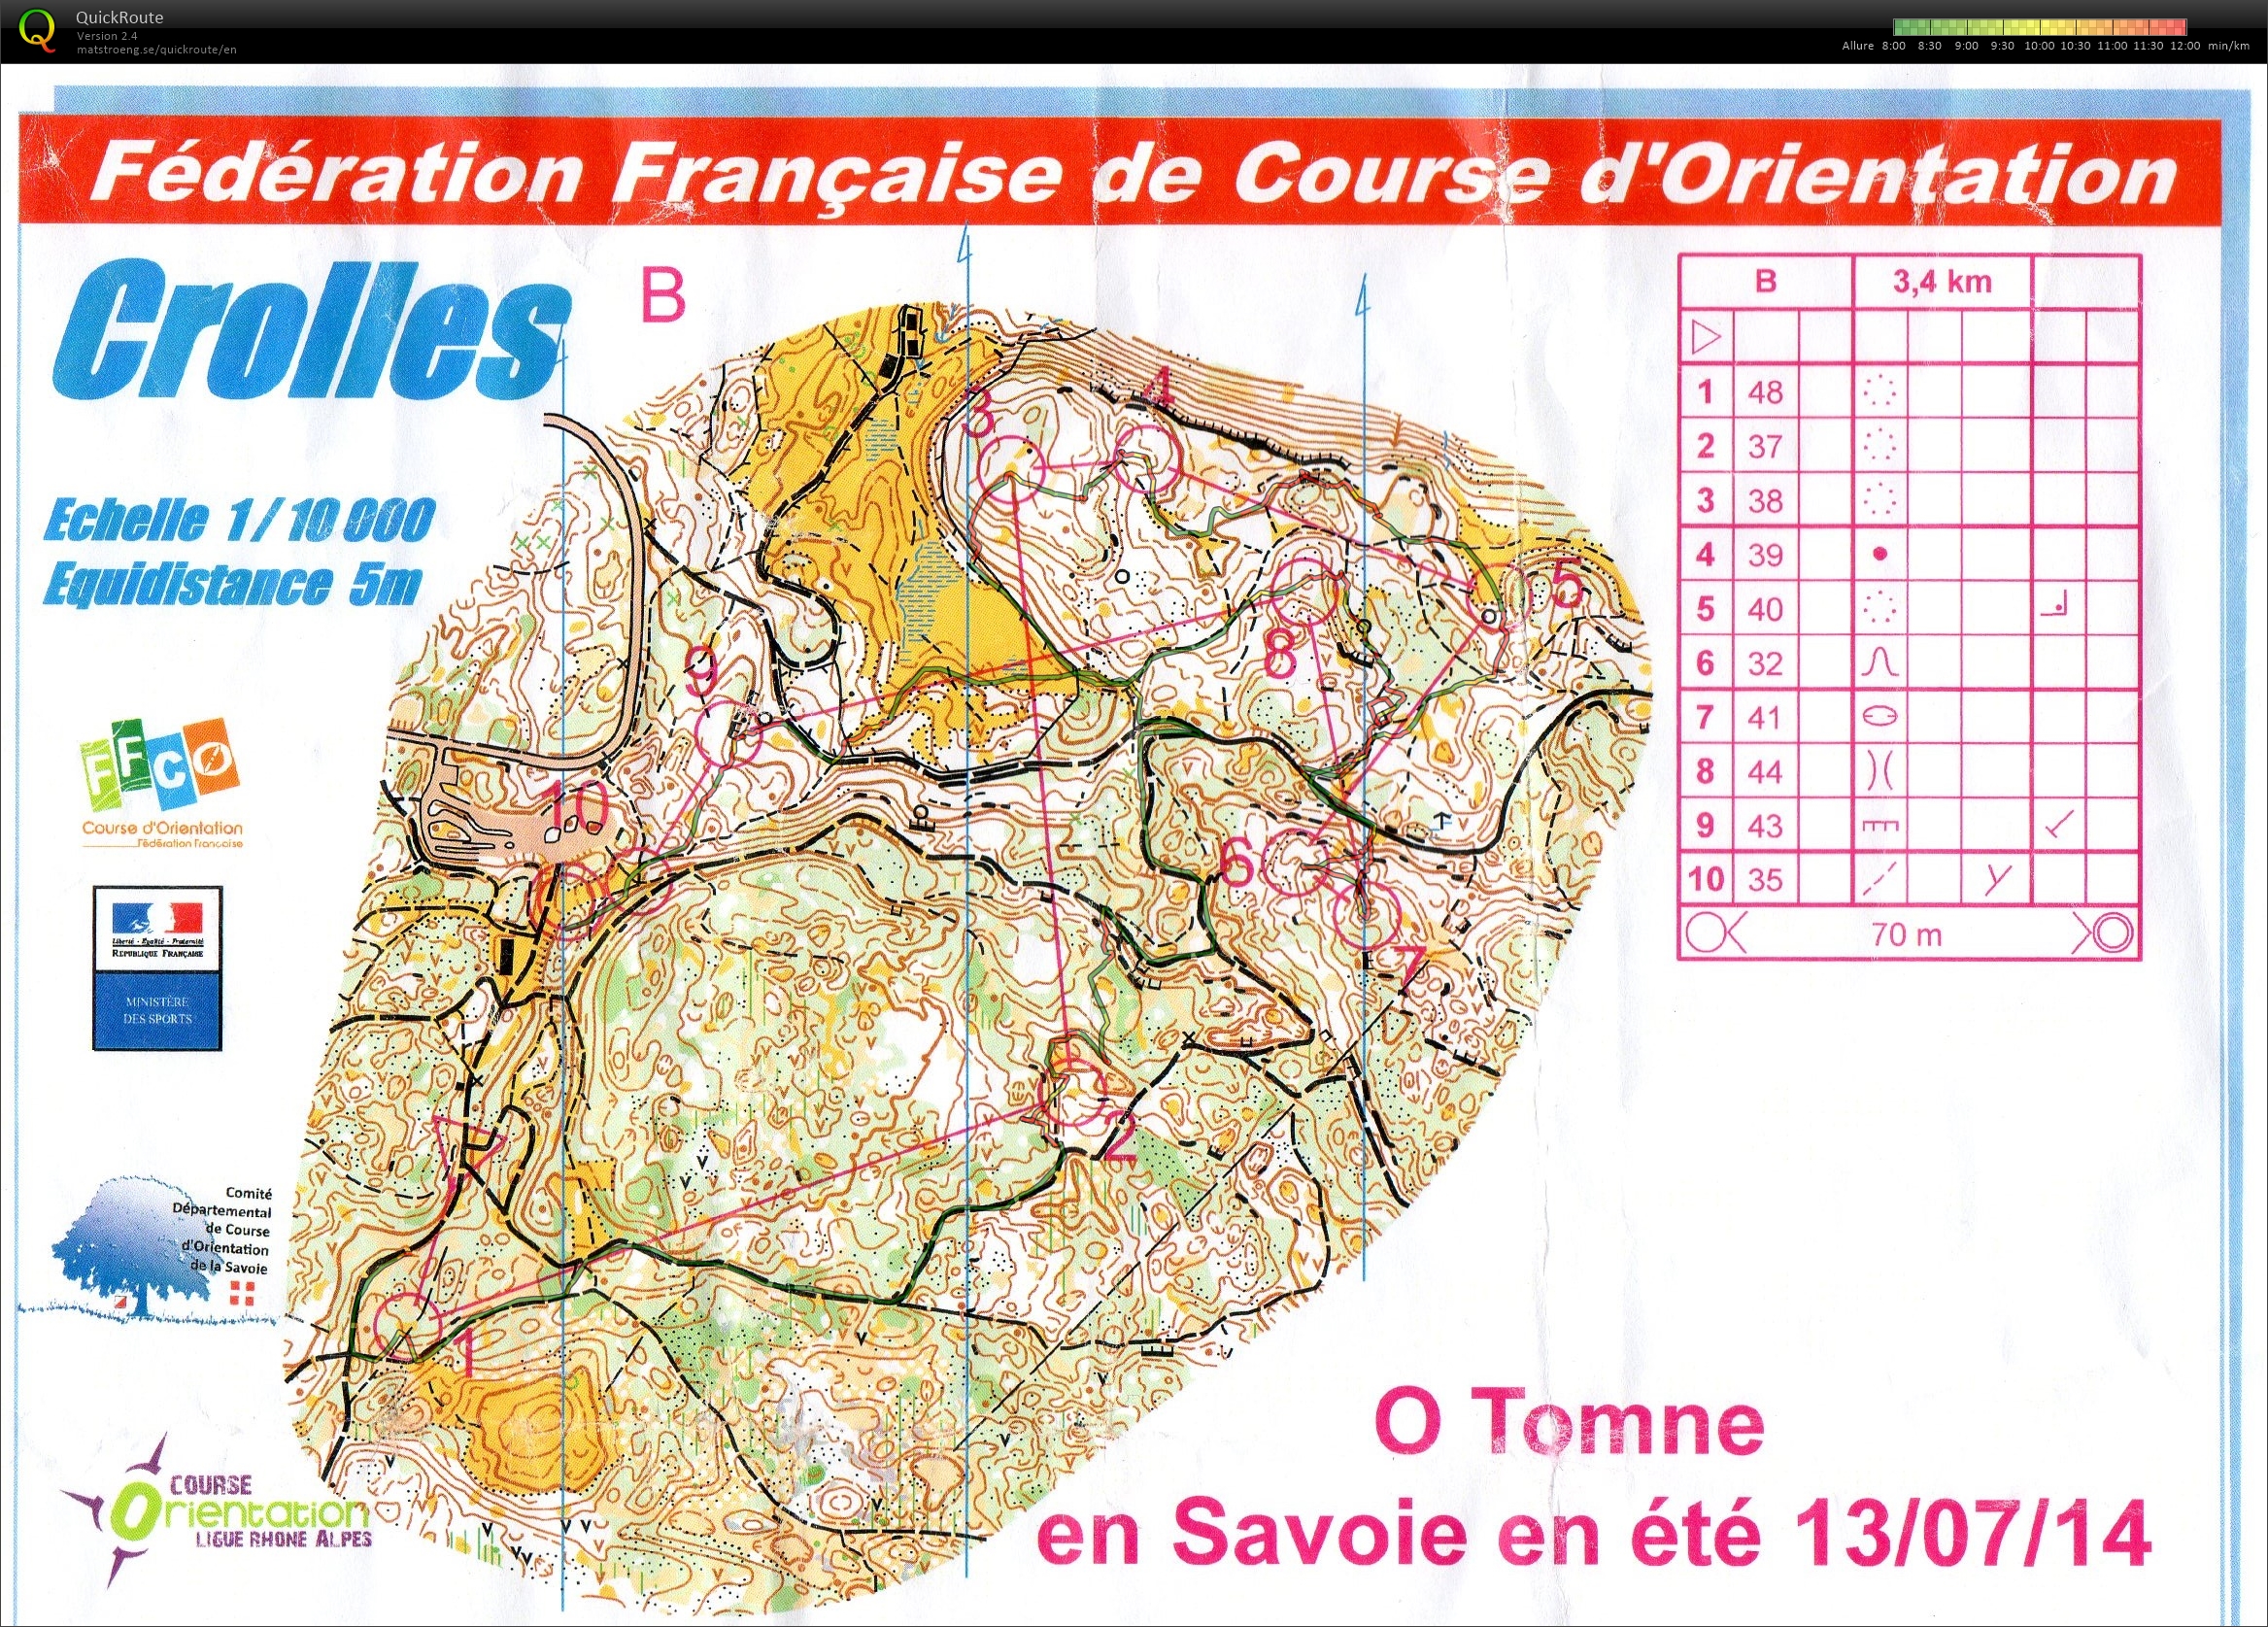 O Tomne en Savoie étape 4 MD (2014-07-15)